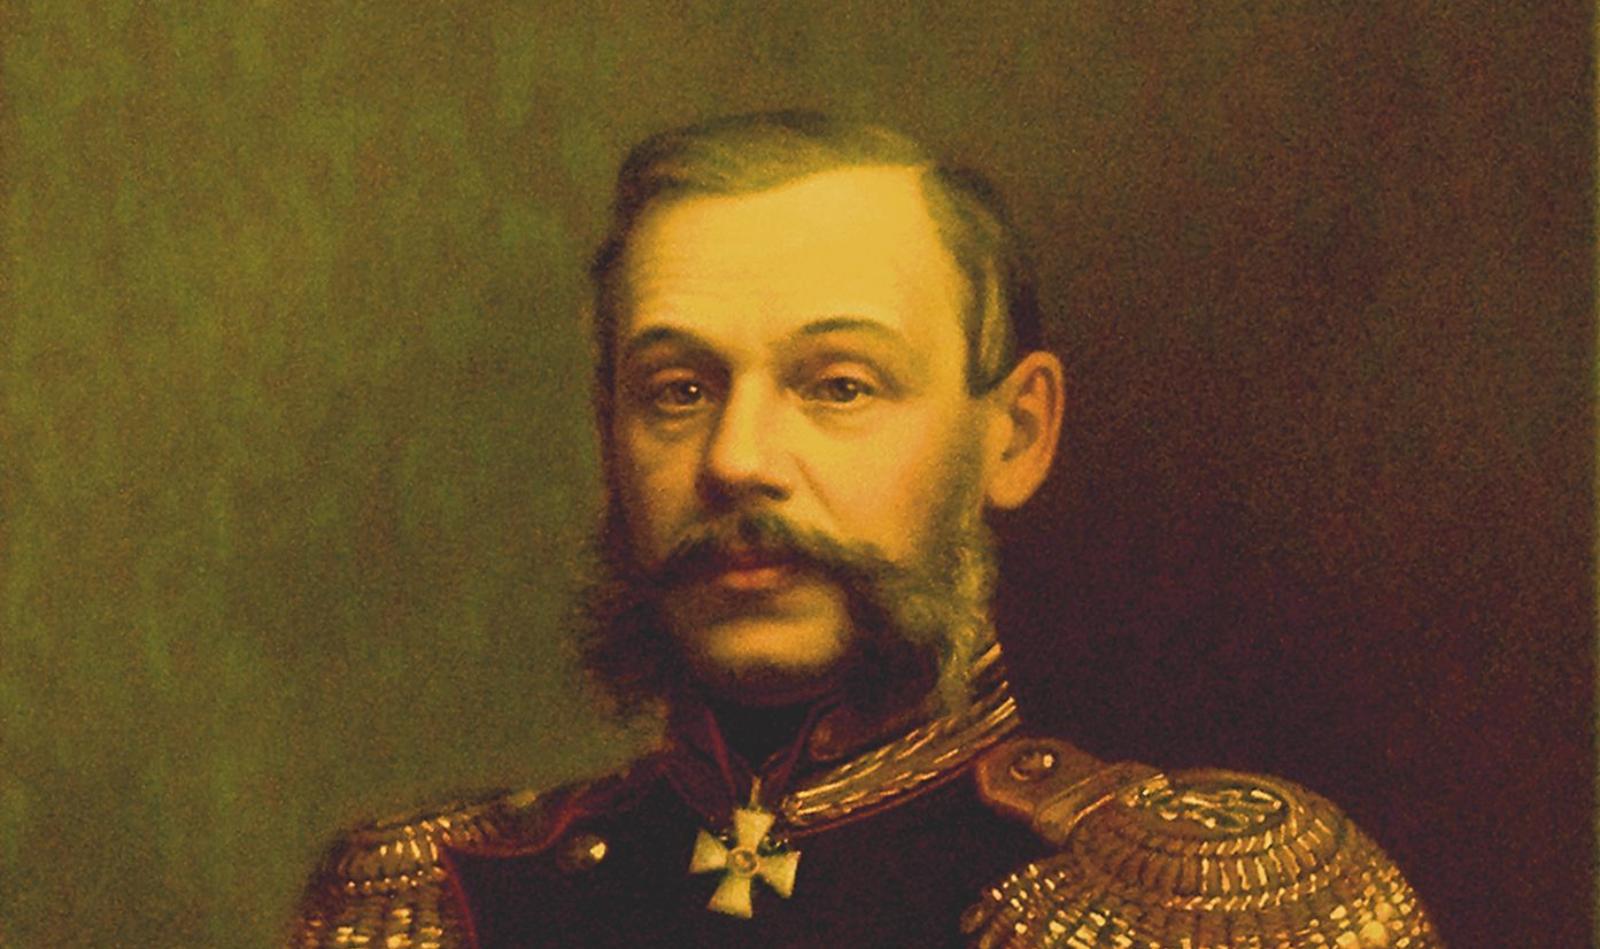 Д. А. Милютин, реформатор, один из сподвижников Александра II.